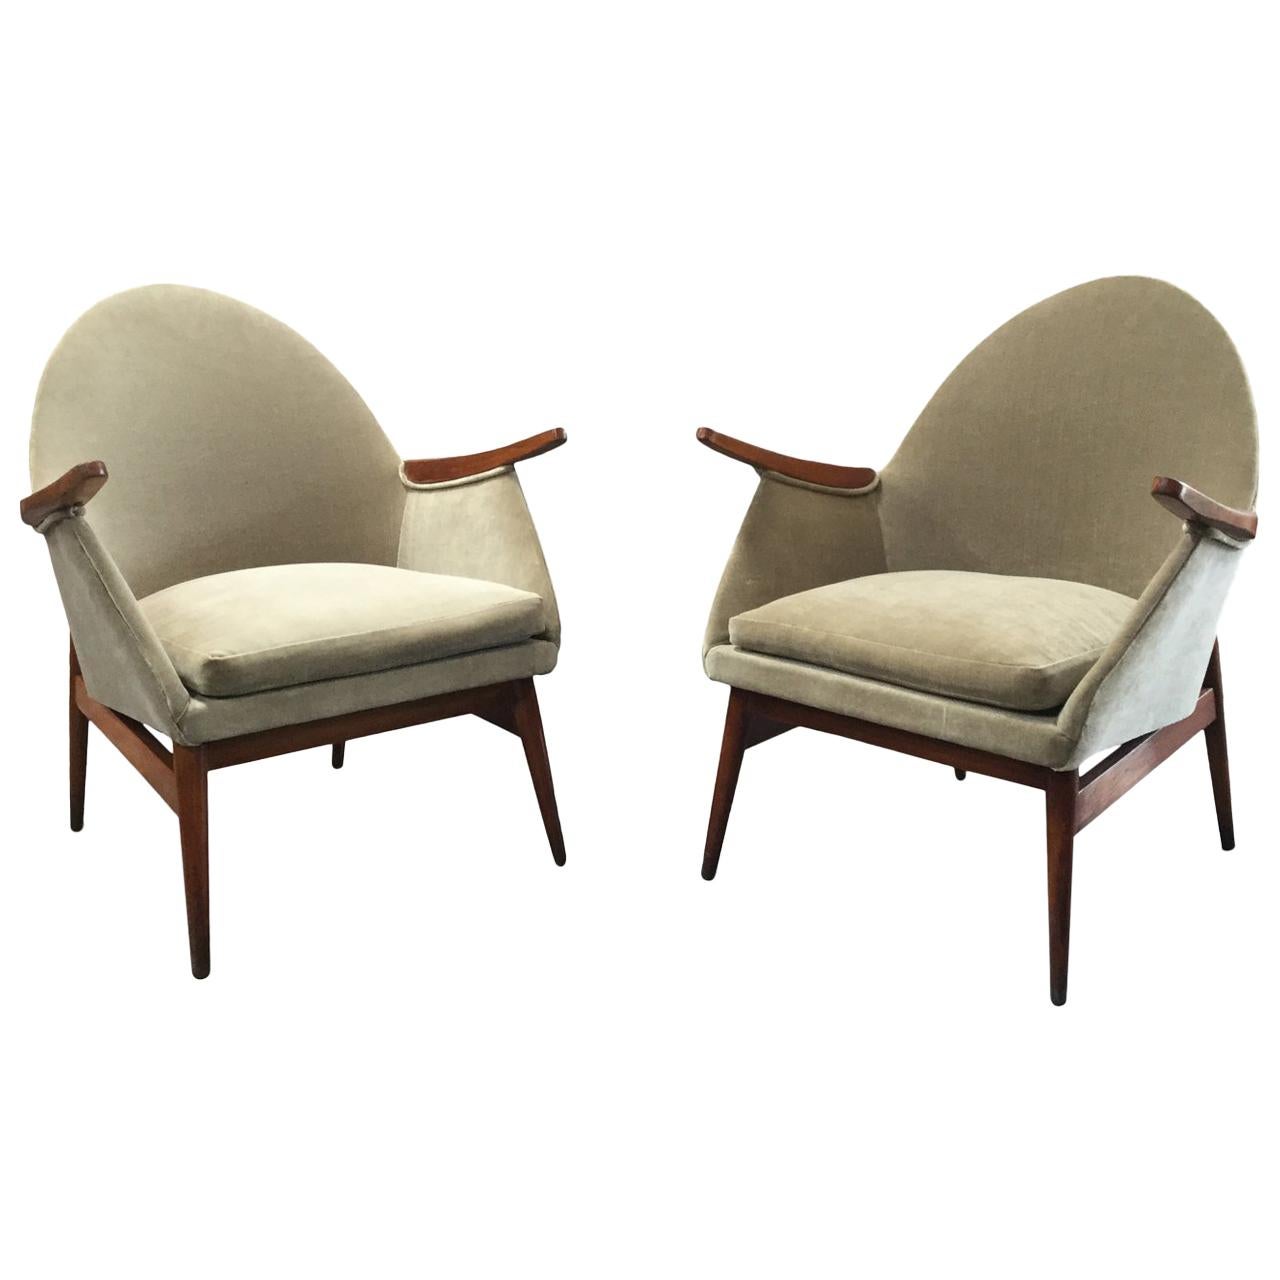 Pair of European Mid-Century Modern Chairs